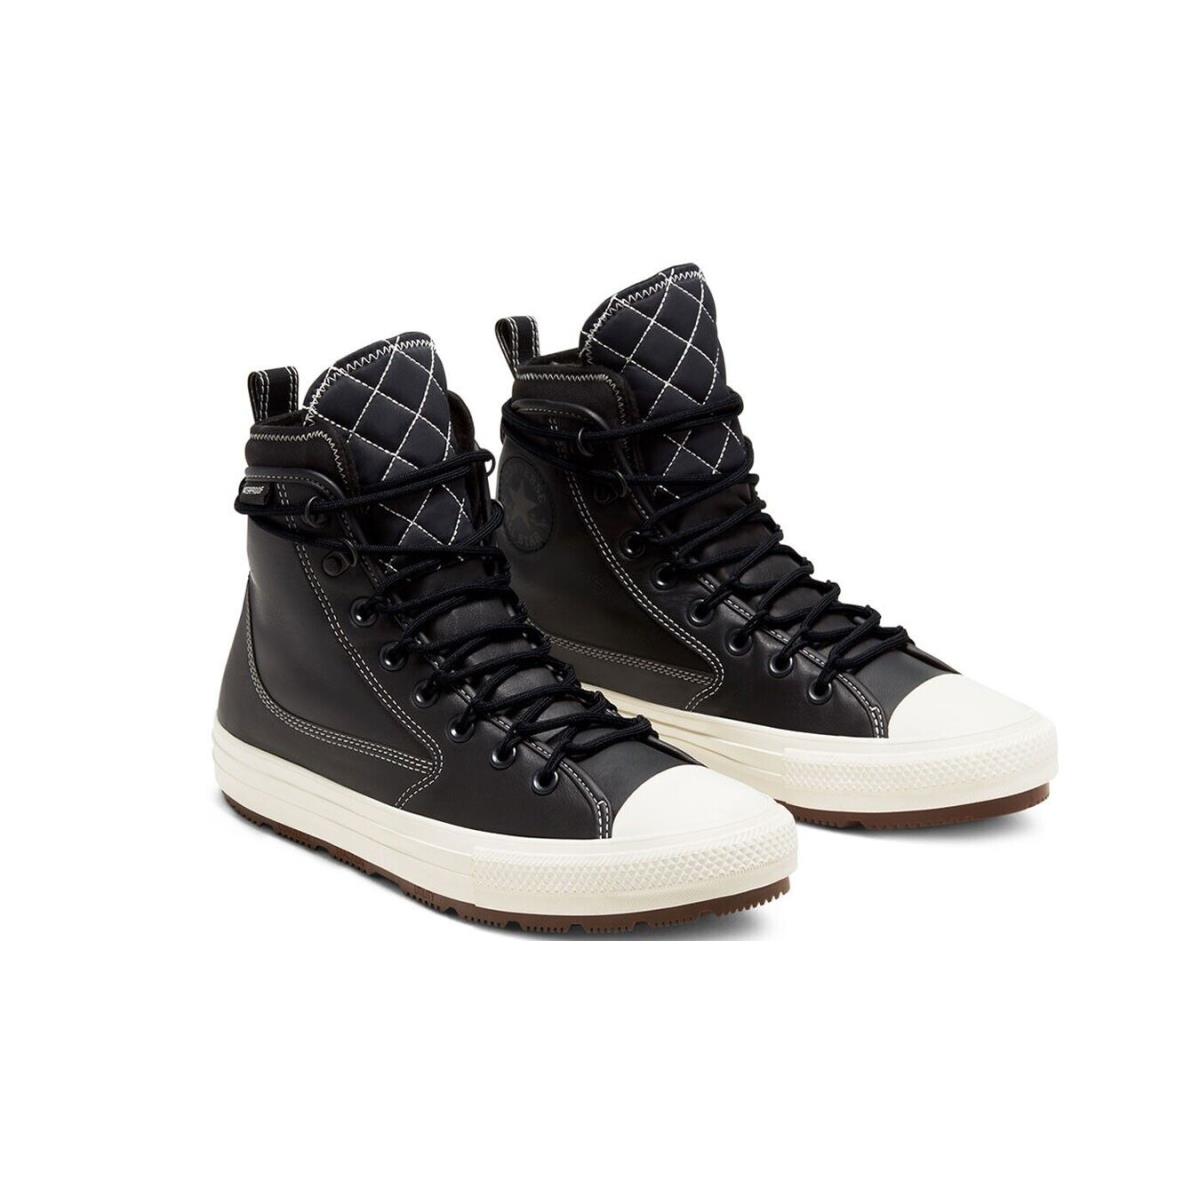 Converse Boots Sz 13 Black Ctas All Terrain HI Waterproof Leather Shoes 168863C